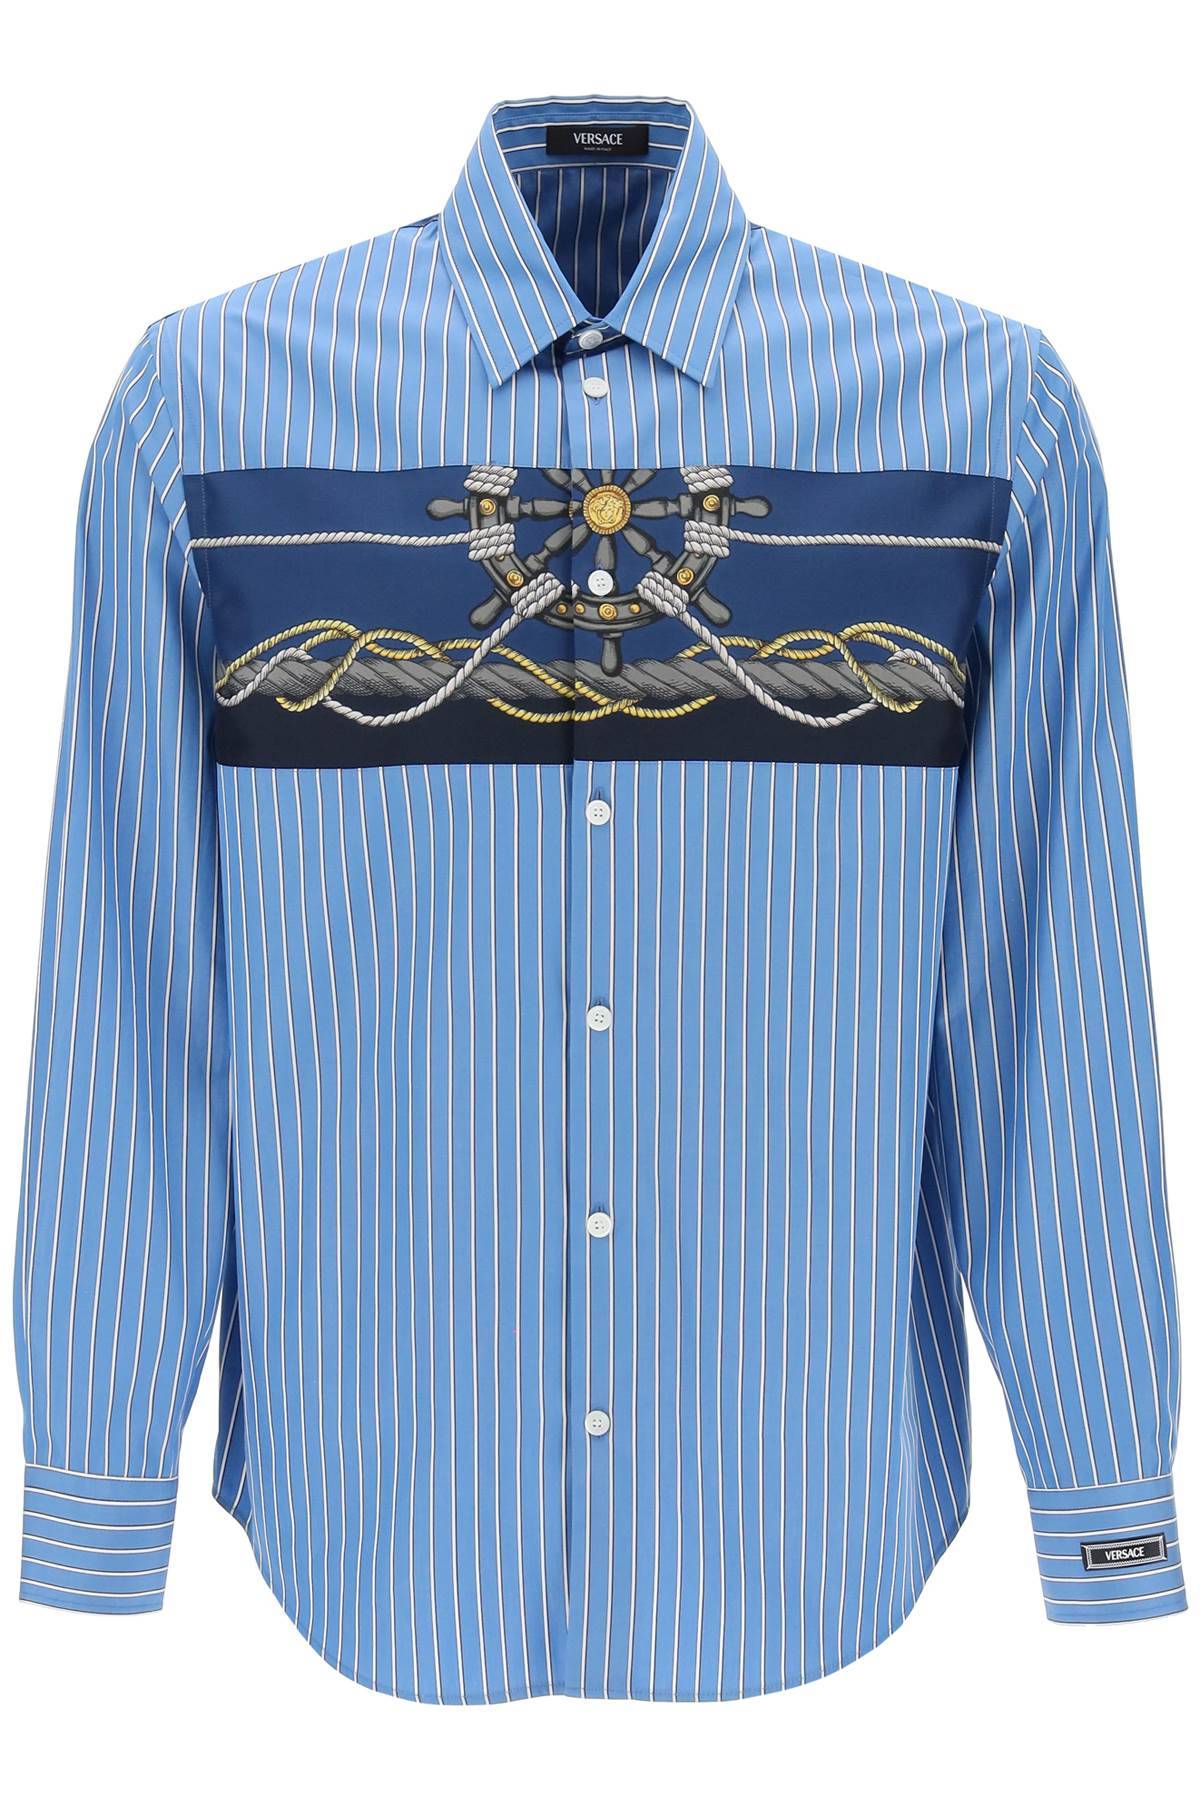 Versace VERSACE striped shirt with versace insert